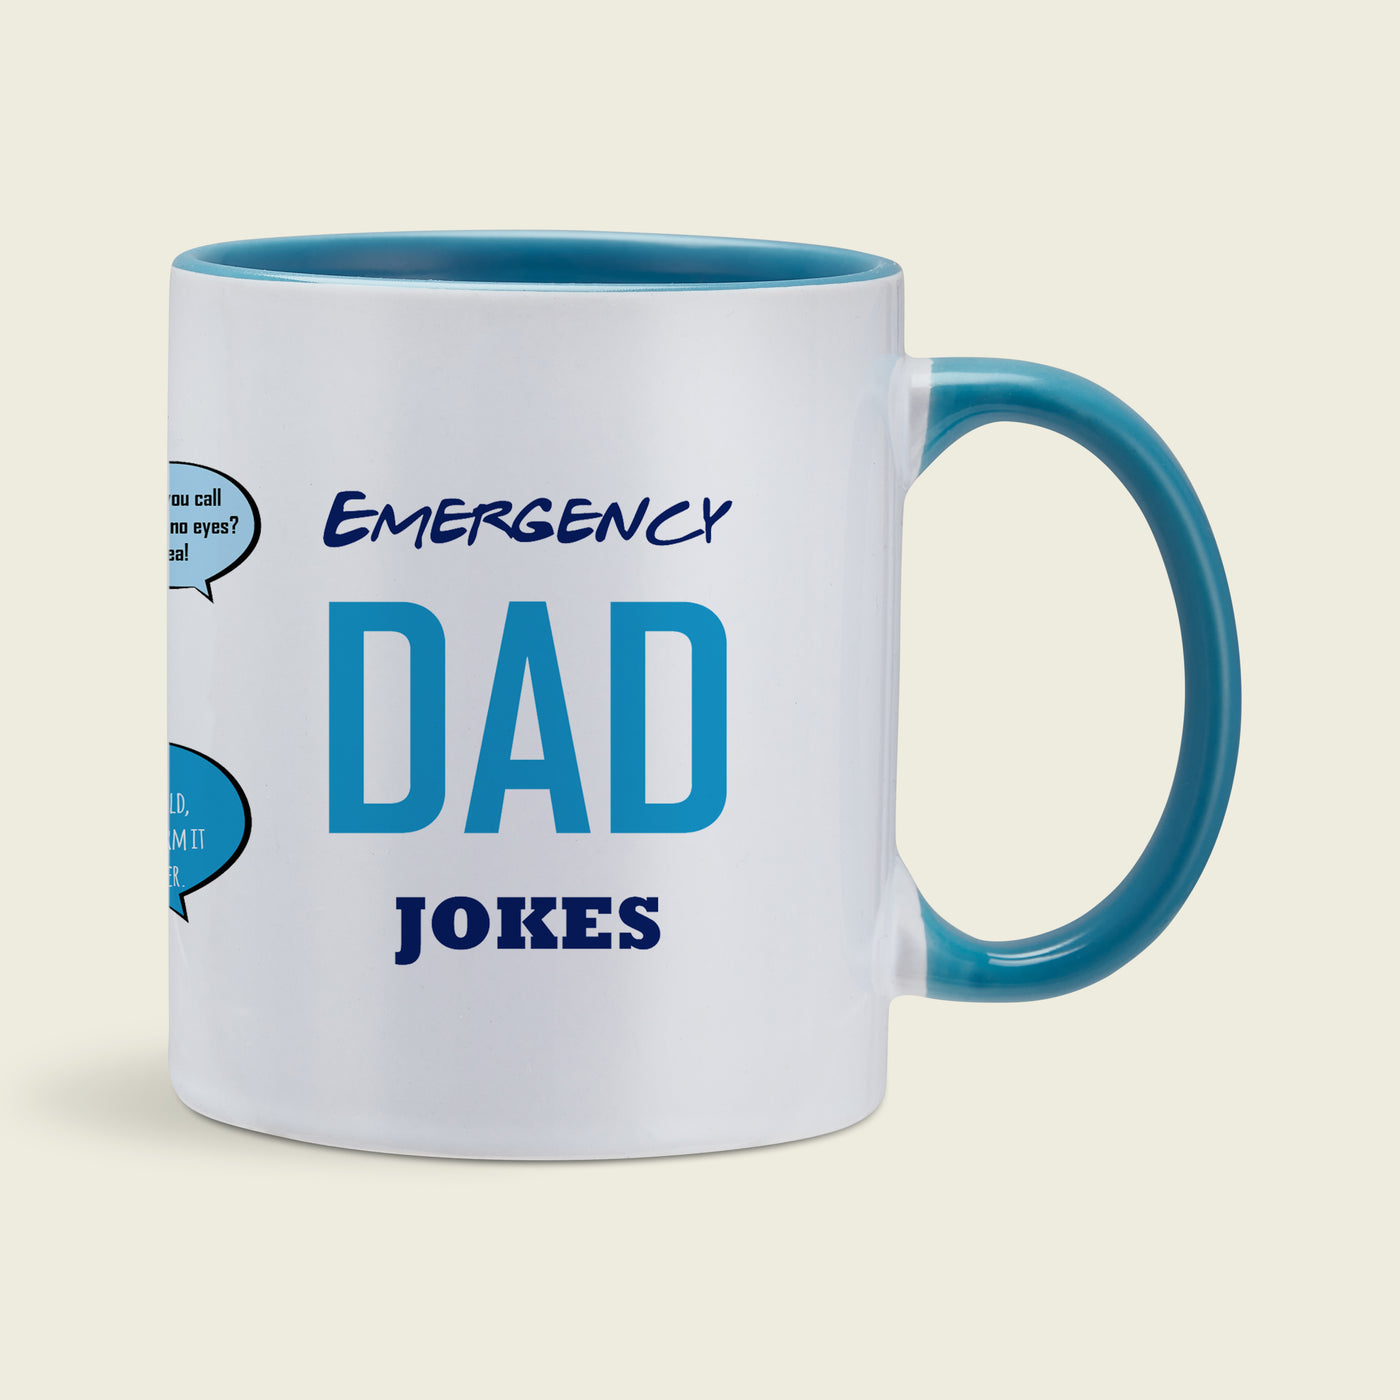 EMERGENCY DAD JOKES Light Blue Mug